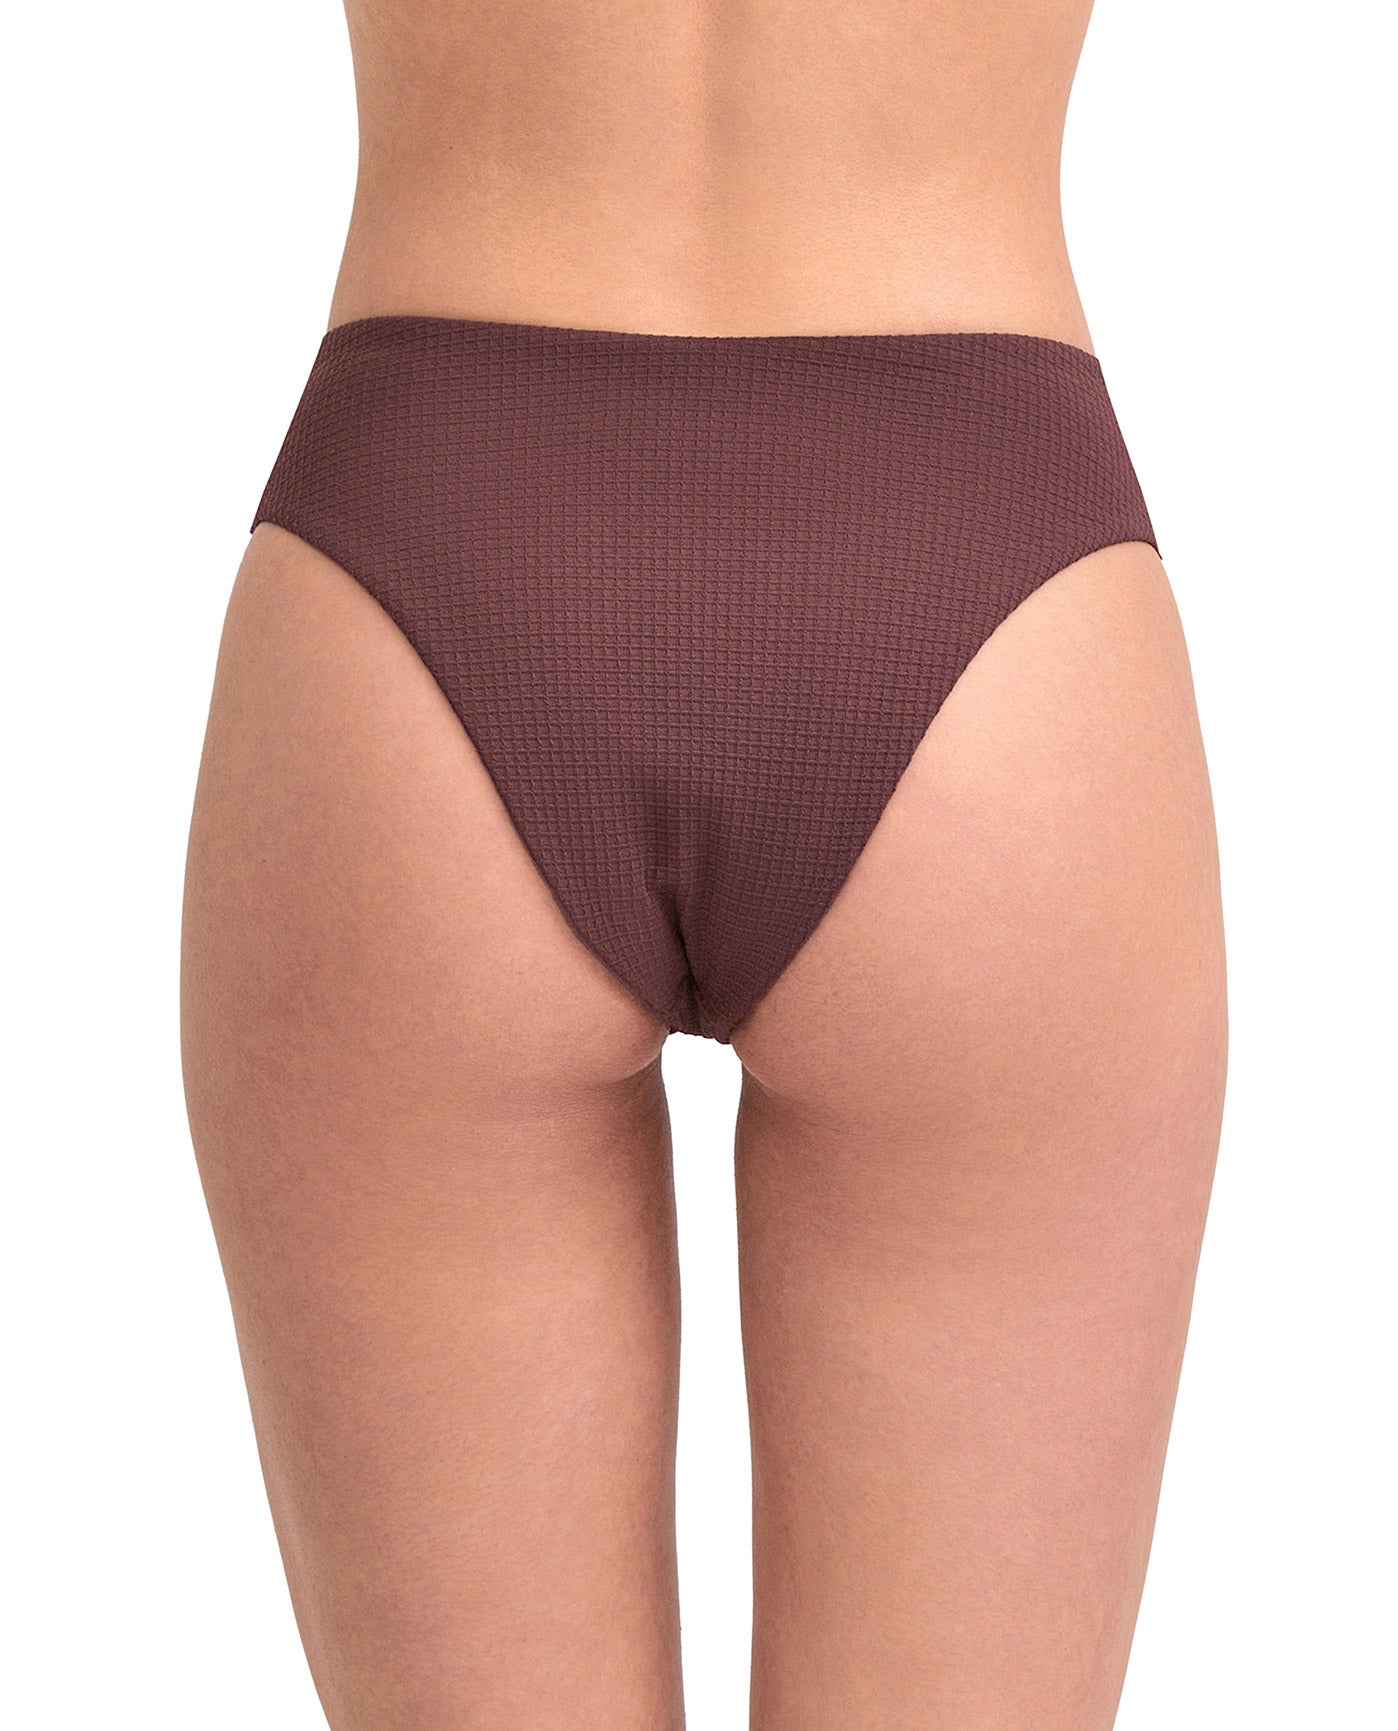 Back View Of Au Naturel Tyra Textured High Leg High Waist Bikini Bottom | AU NATUREL BRUNETTE TEXTURED